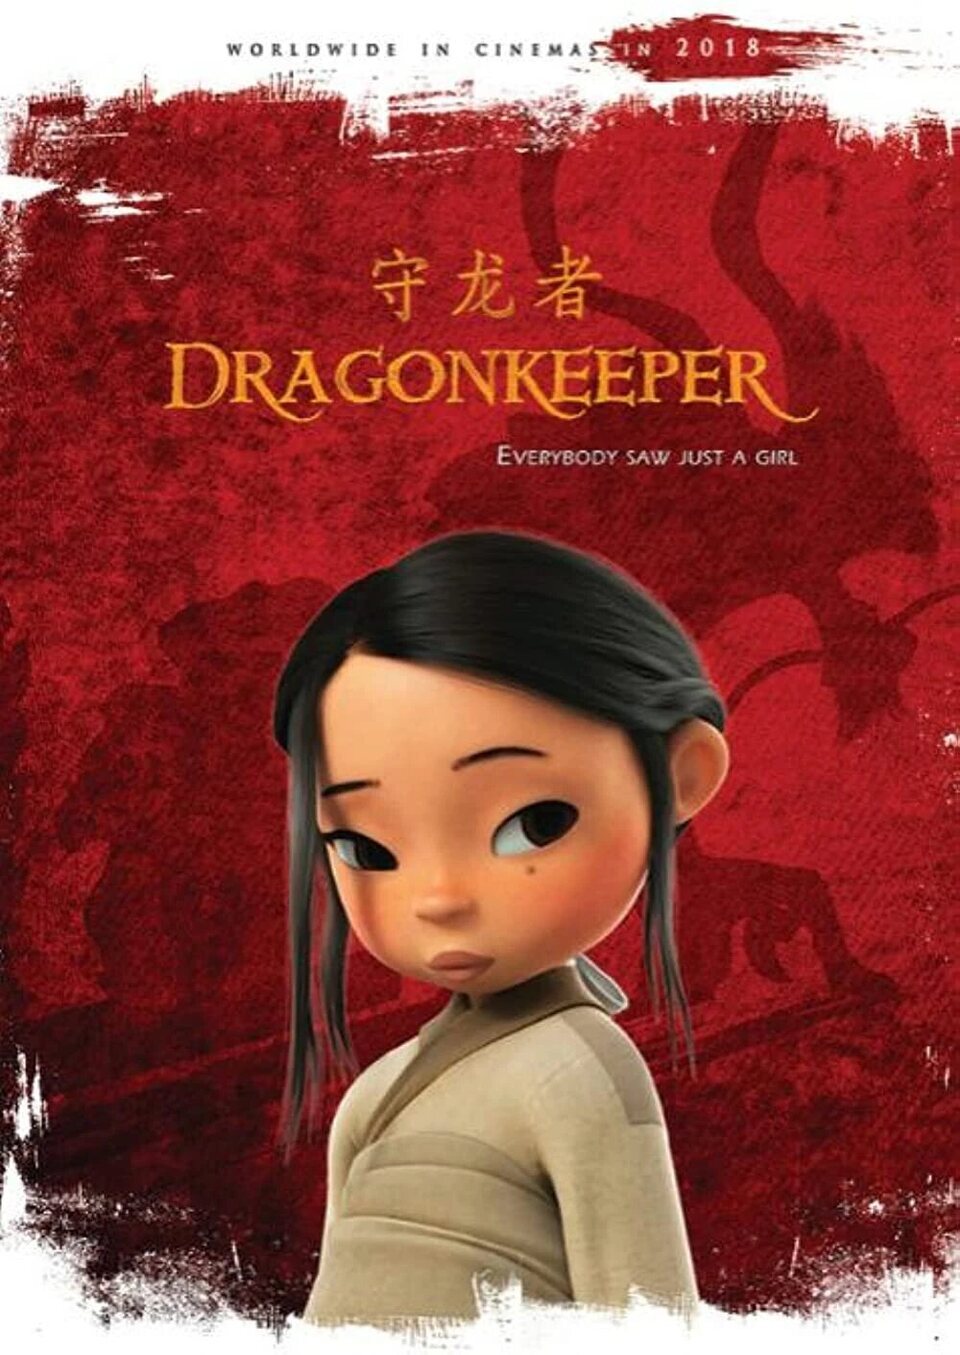 Cartel de Guardiana de dragones (Dragonkeeper) - Dragonkeeper